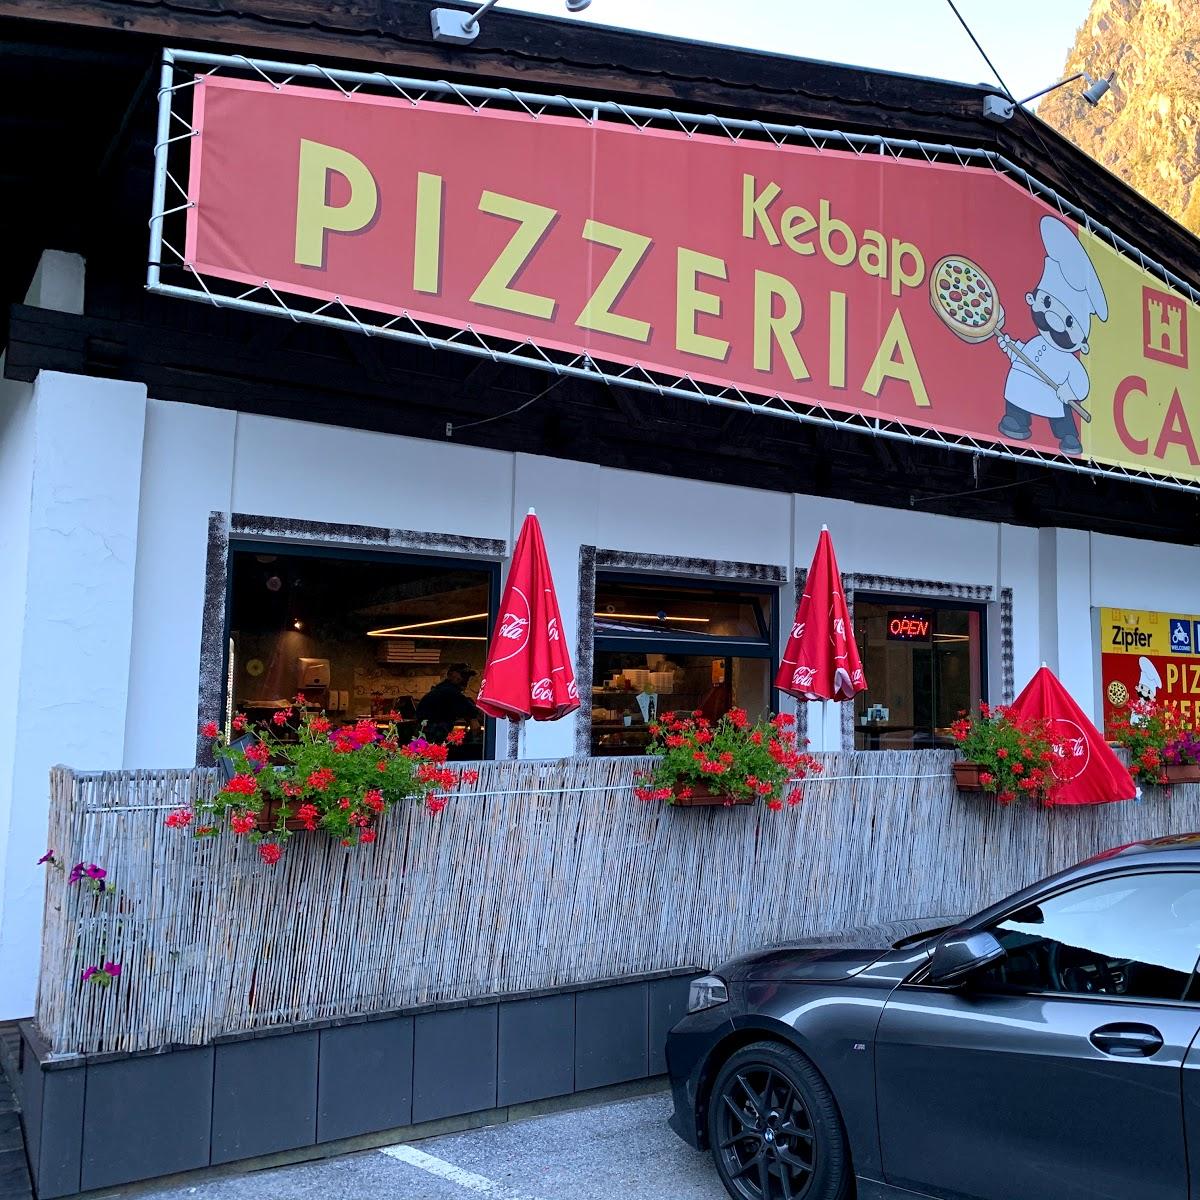 Restaurant "Pizzeria Castello" in Tumpen